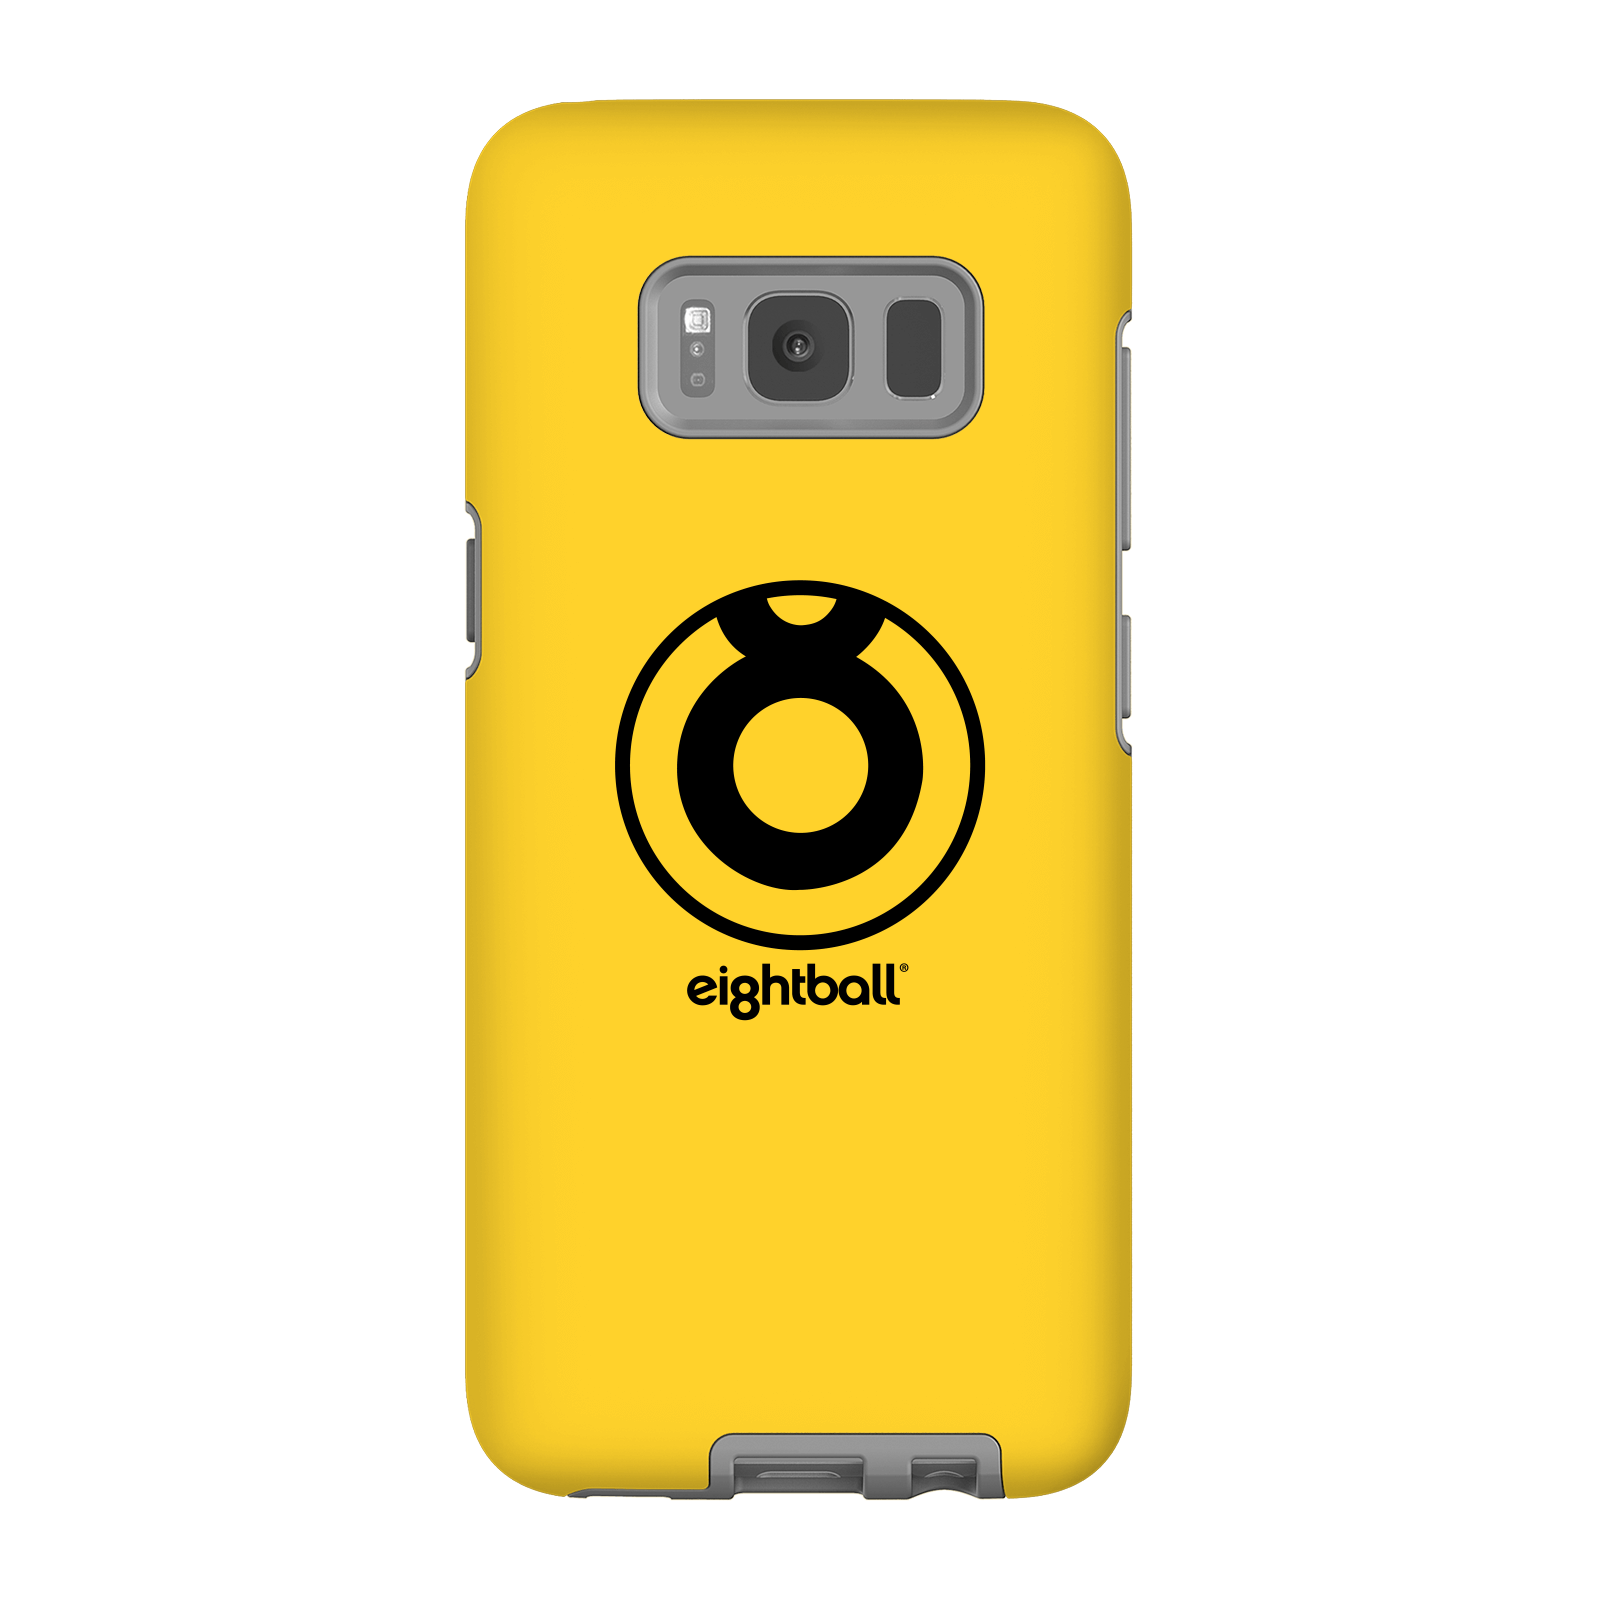 Funda Móvil Ei8htball Large Circle Logo para iPhone y Android - Samsung S8 - Carcasa doble capa - Mate